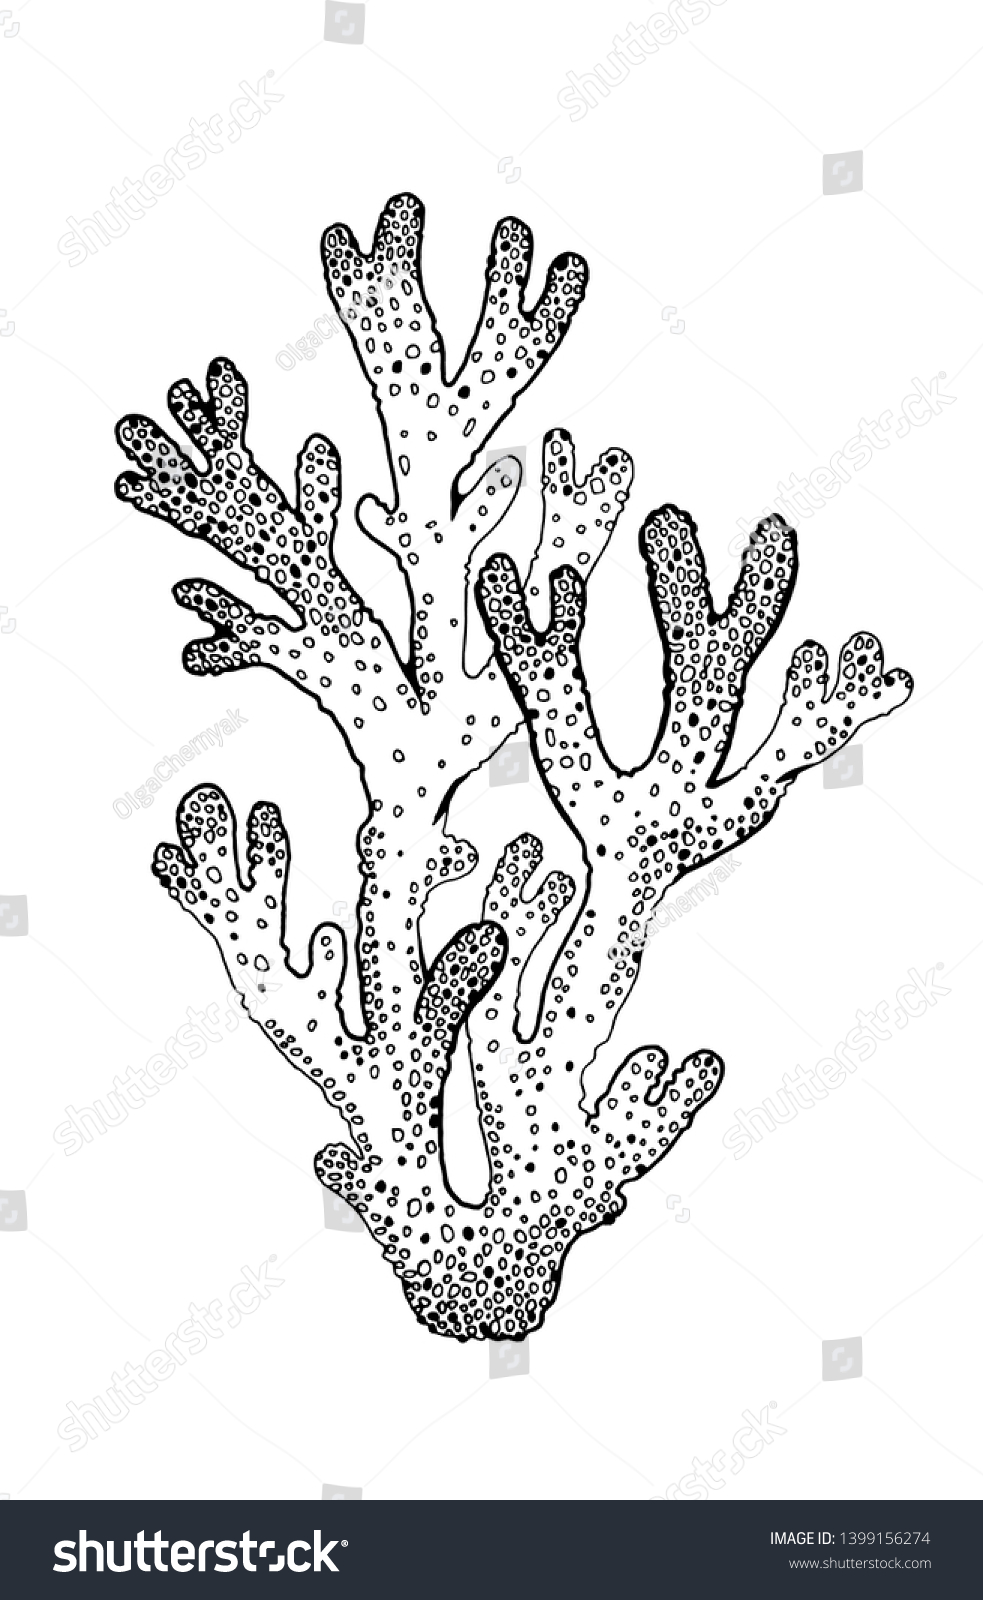 Download Underwater Coral Reef Sketch Sea Weed Stock Vector Royalty Free 1399156274